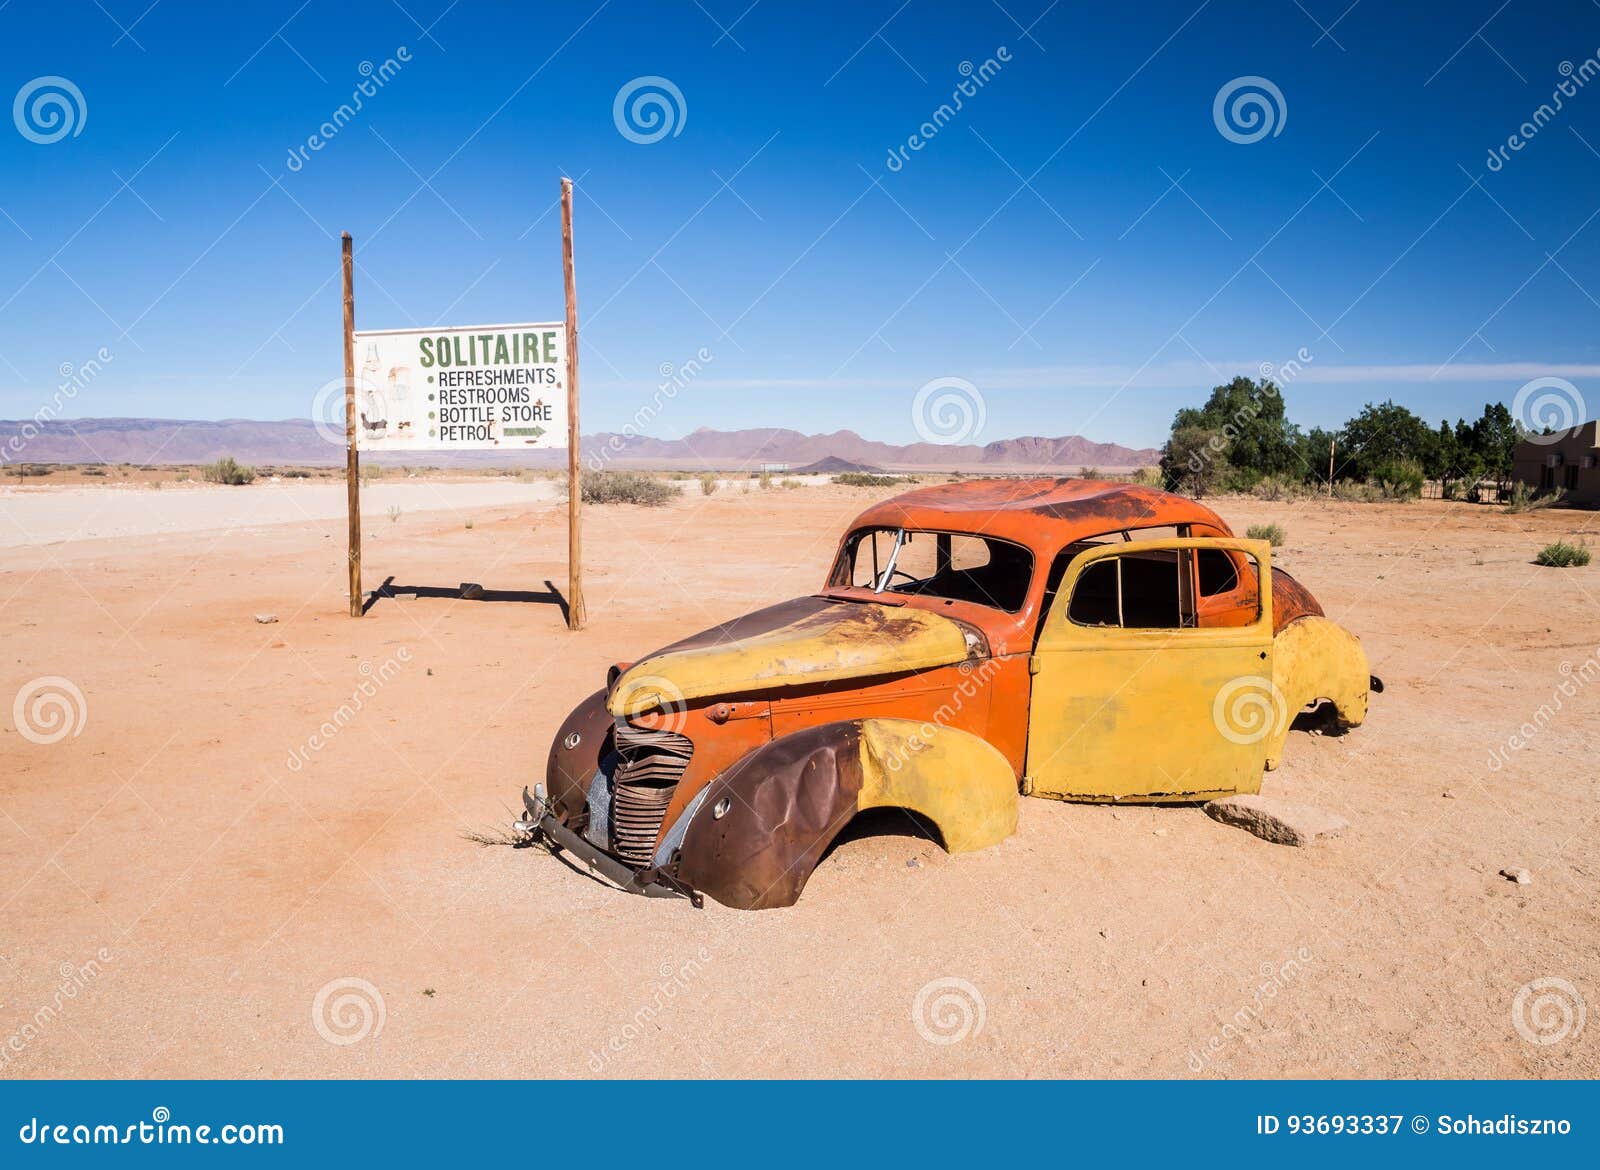 Old Car Wreck Left on the Namib Desert, Namibia. Stock Image - Image of ...